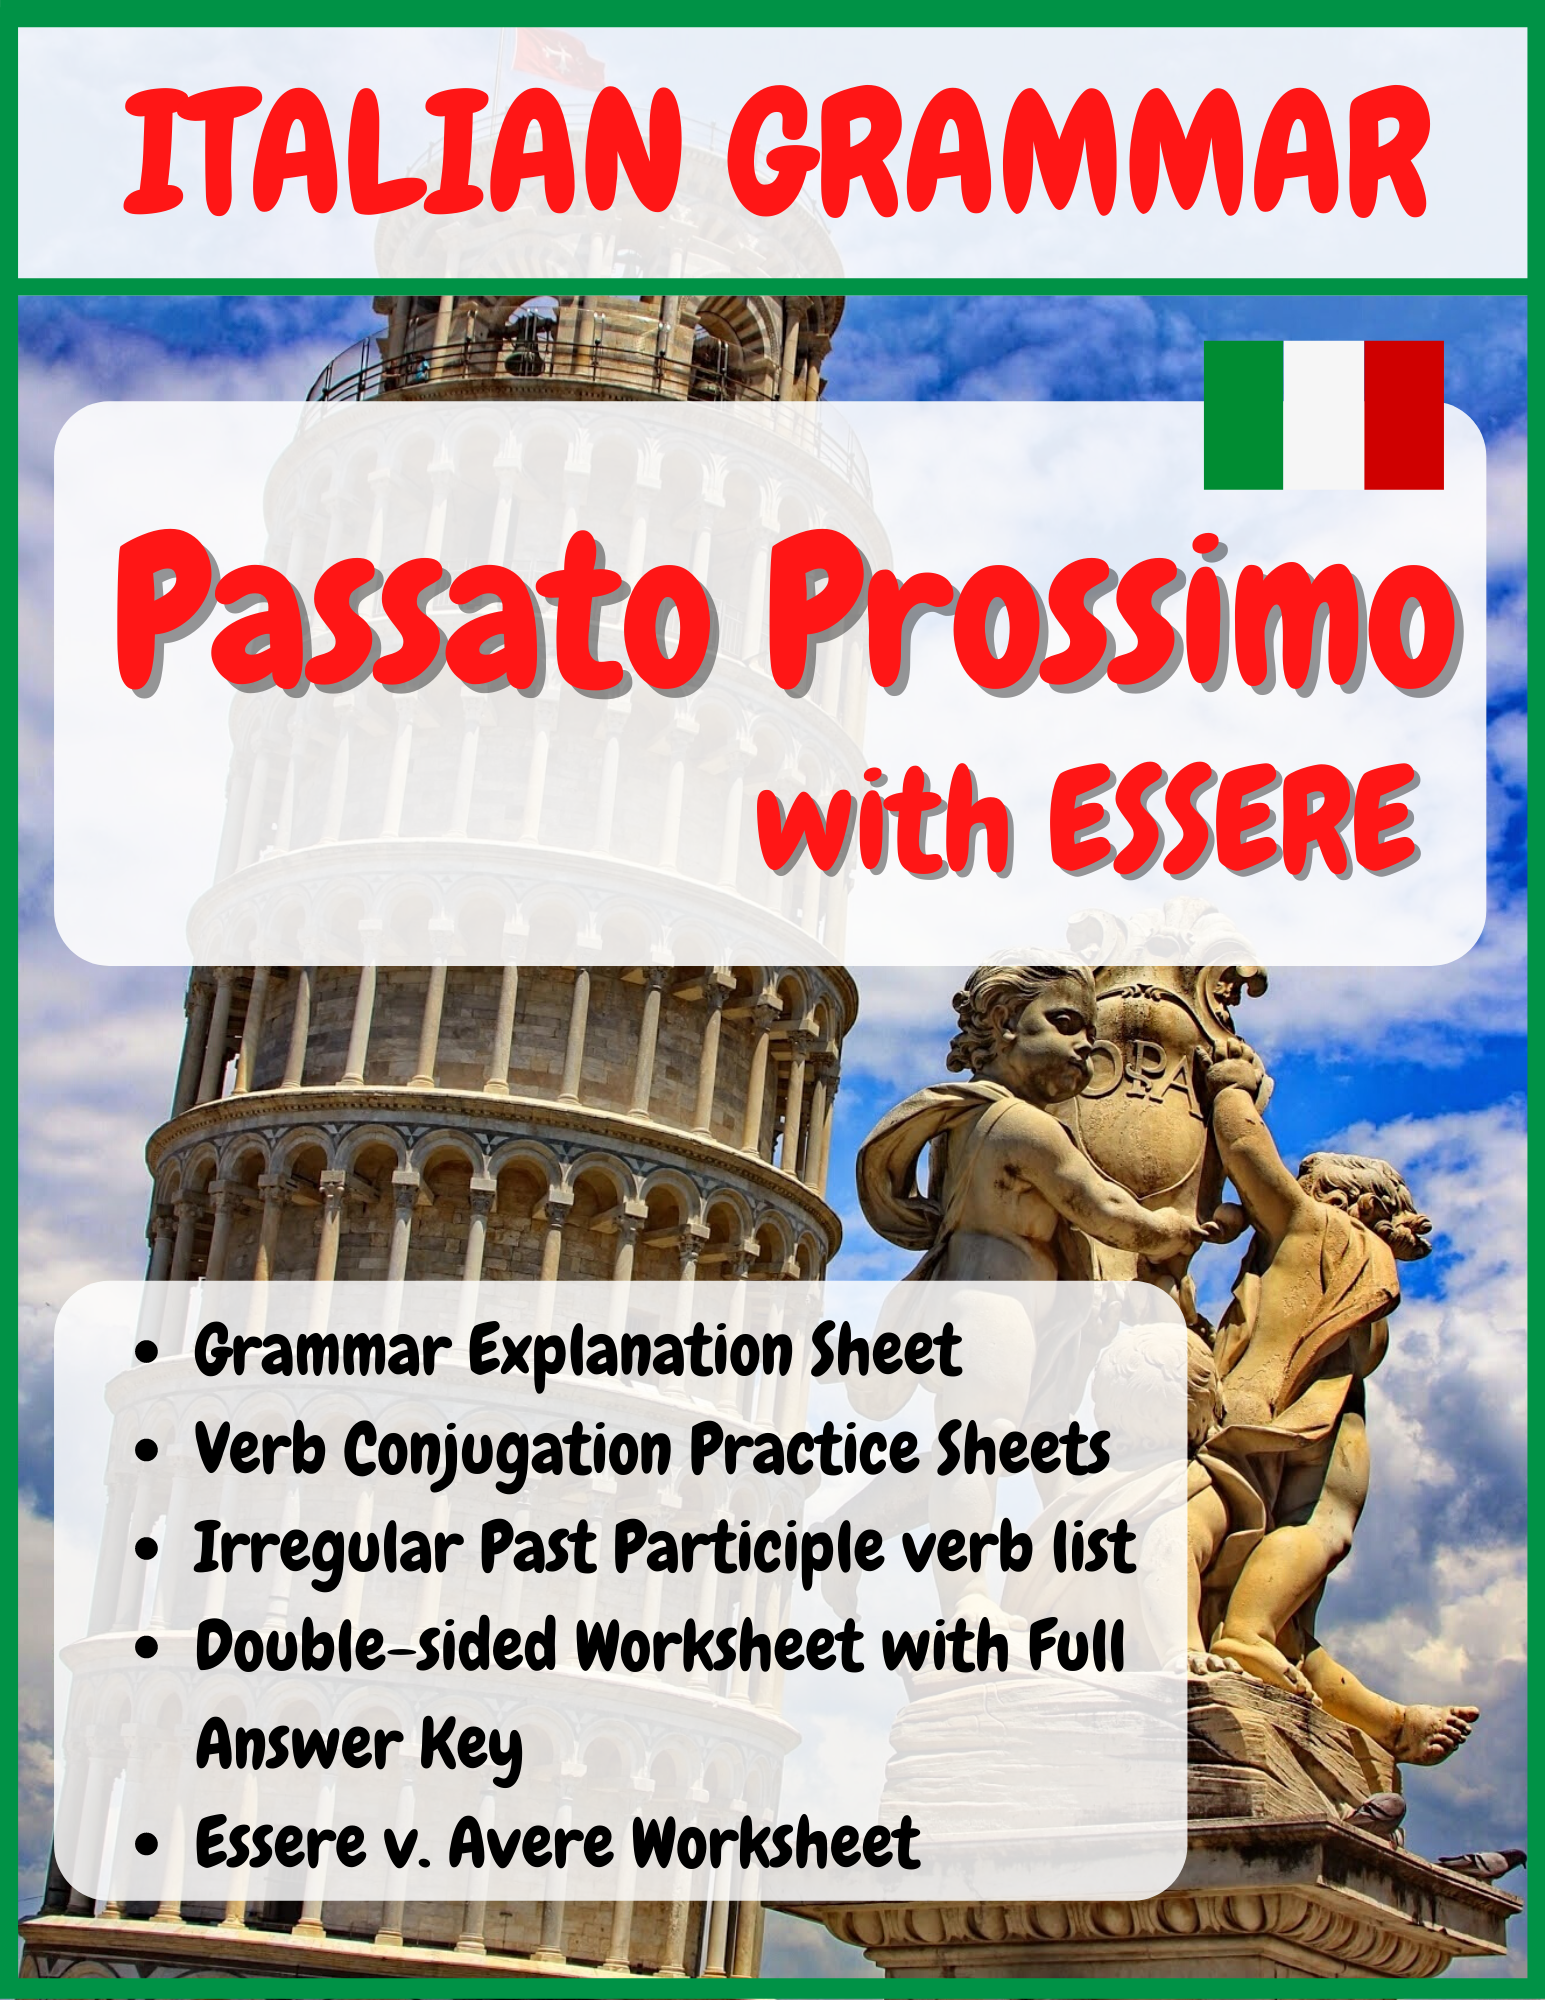 Italian Grammar Worksheets Passato Prossimo with Essere